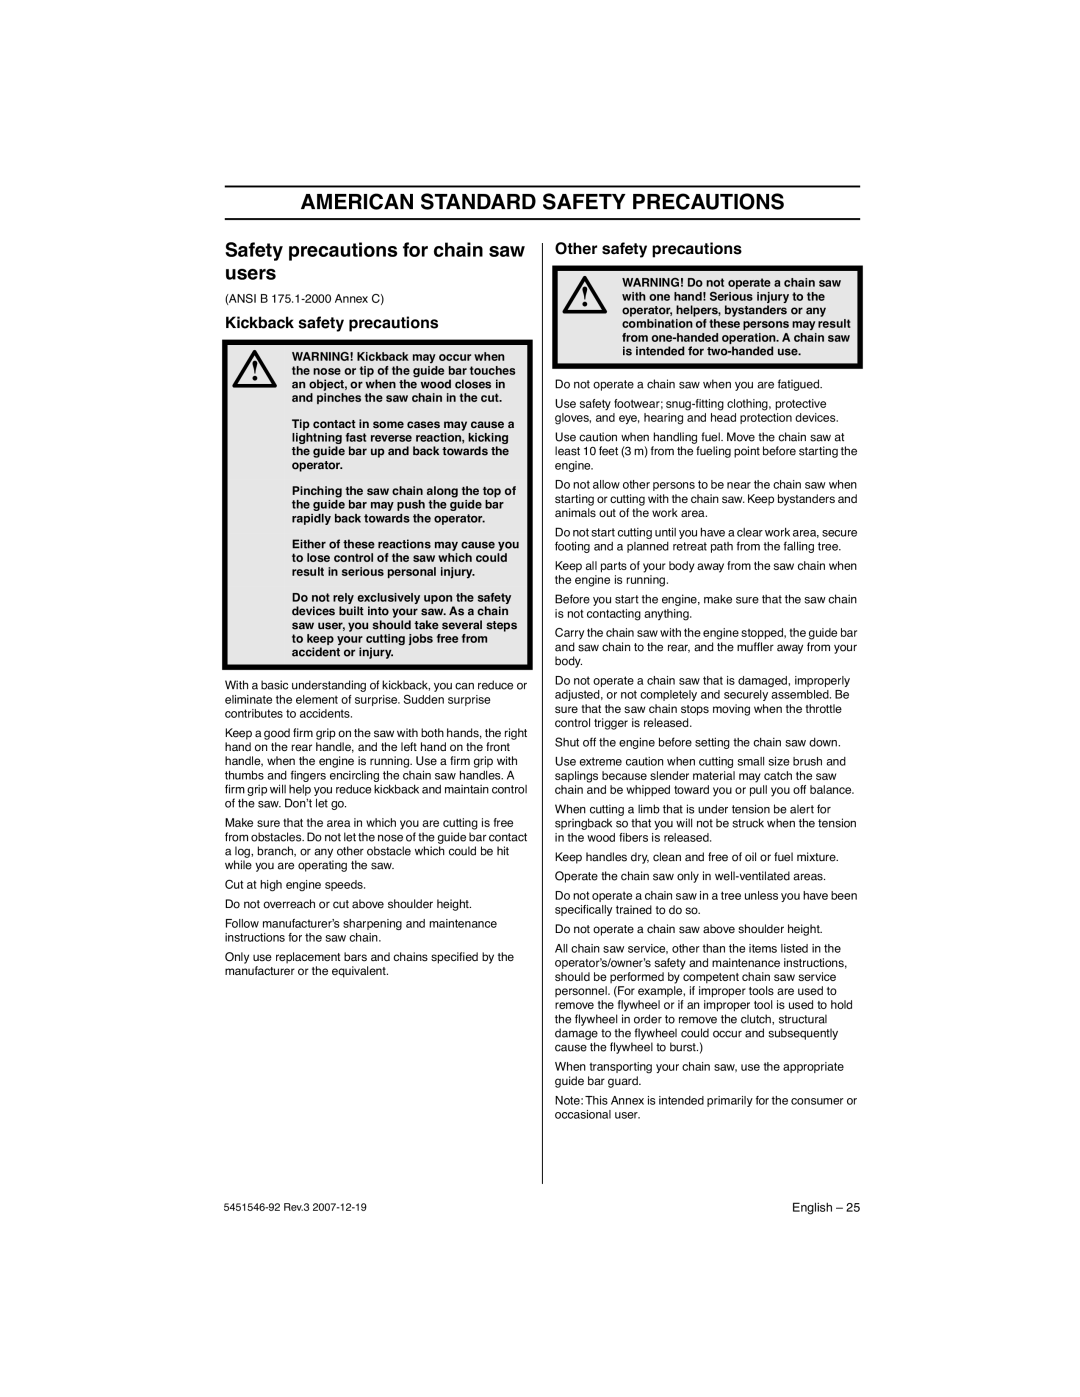 Husqvarna 240e American Standard Safety Precautions, Safety precautions for chain saw users, Kickback safety precautions 